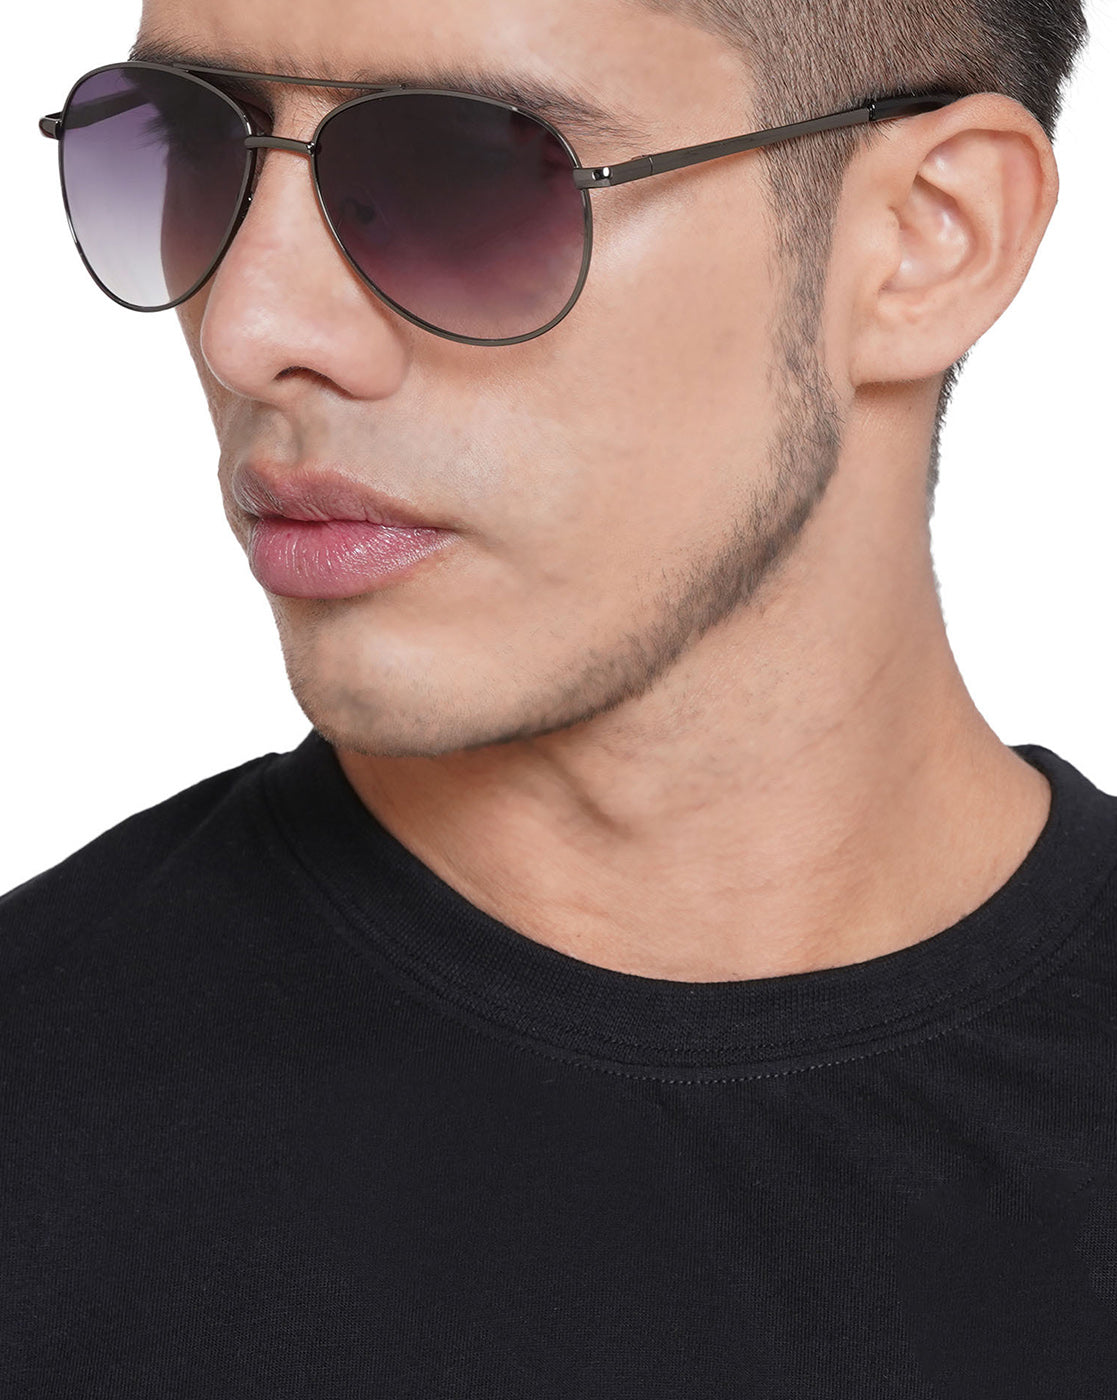 Buy Polarized Aviator Sunglasses for Juniors Small Face Women Men Vintage  UV400 Protection Shades(Black Frame/Black Lens) at Amazon.in